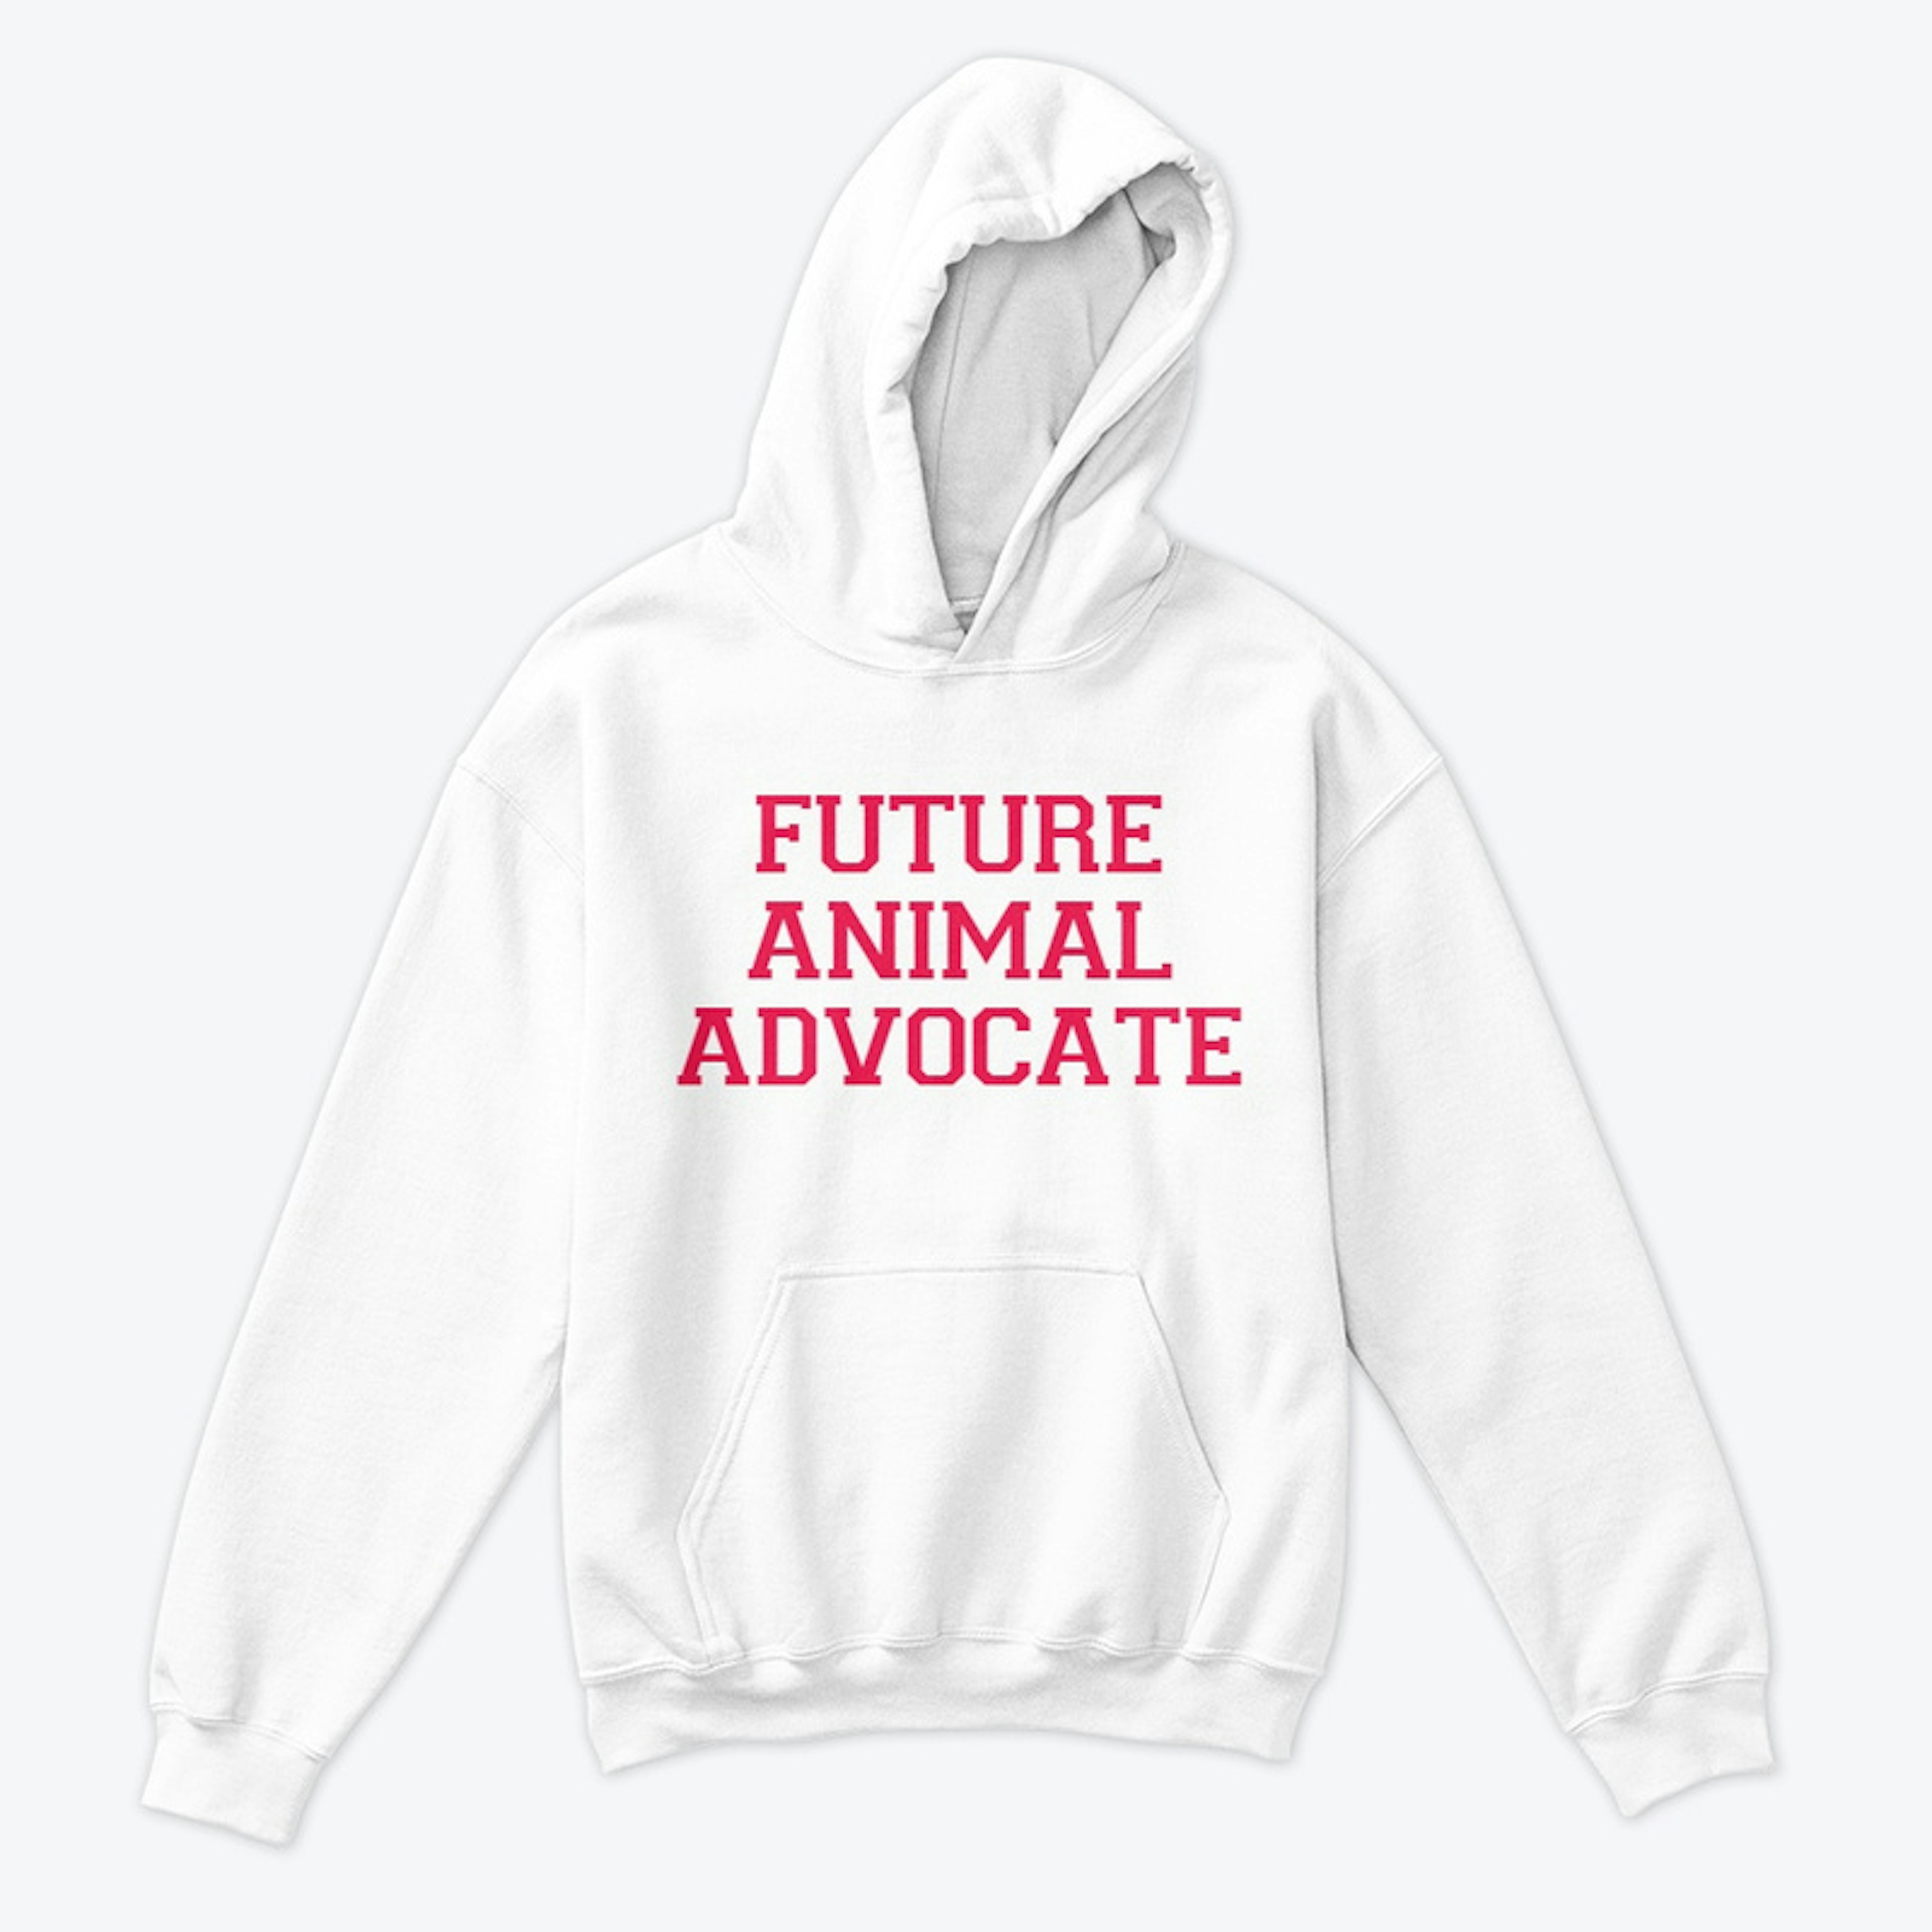 Future Animal Advocate! 